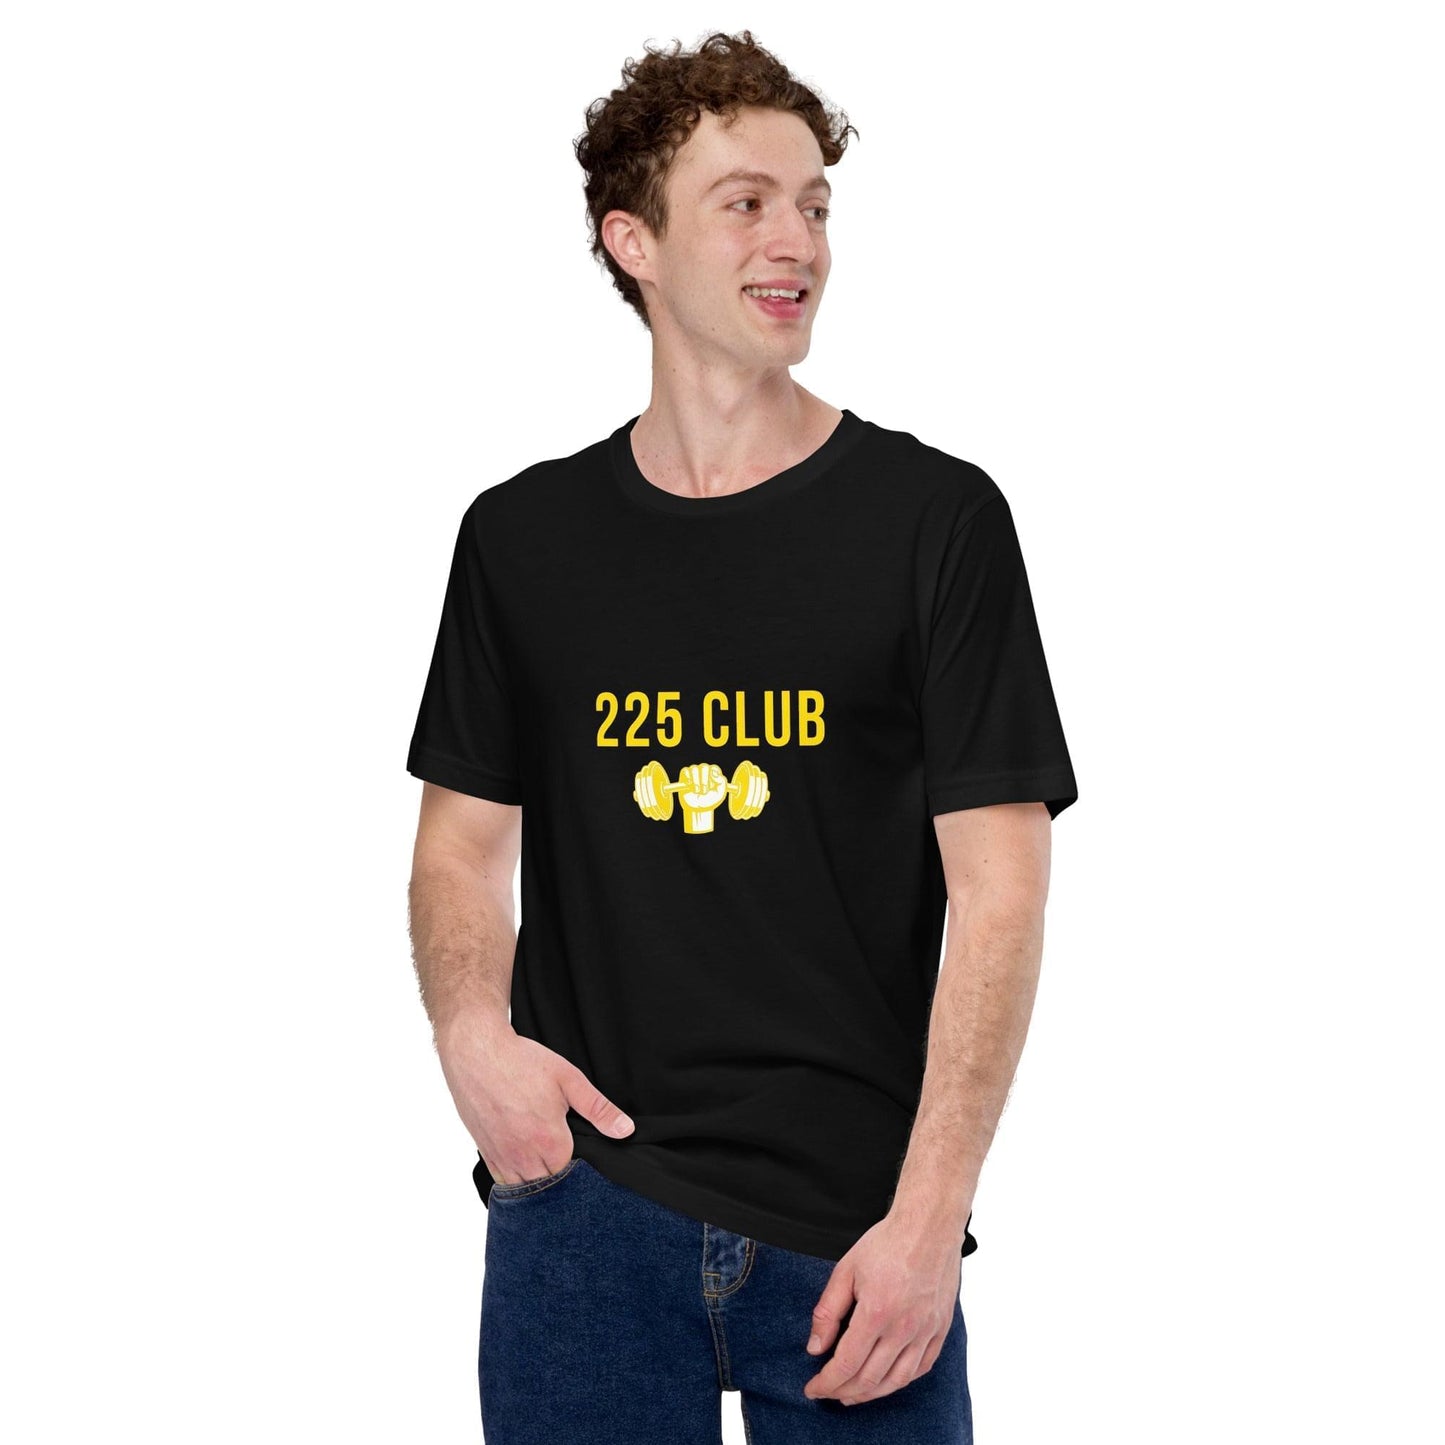 225 Club T-shirt